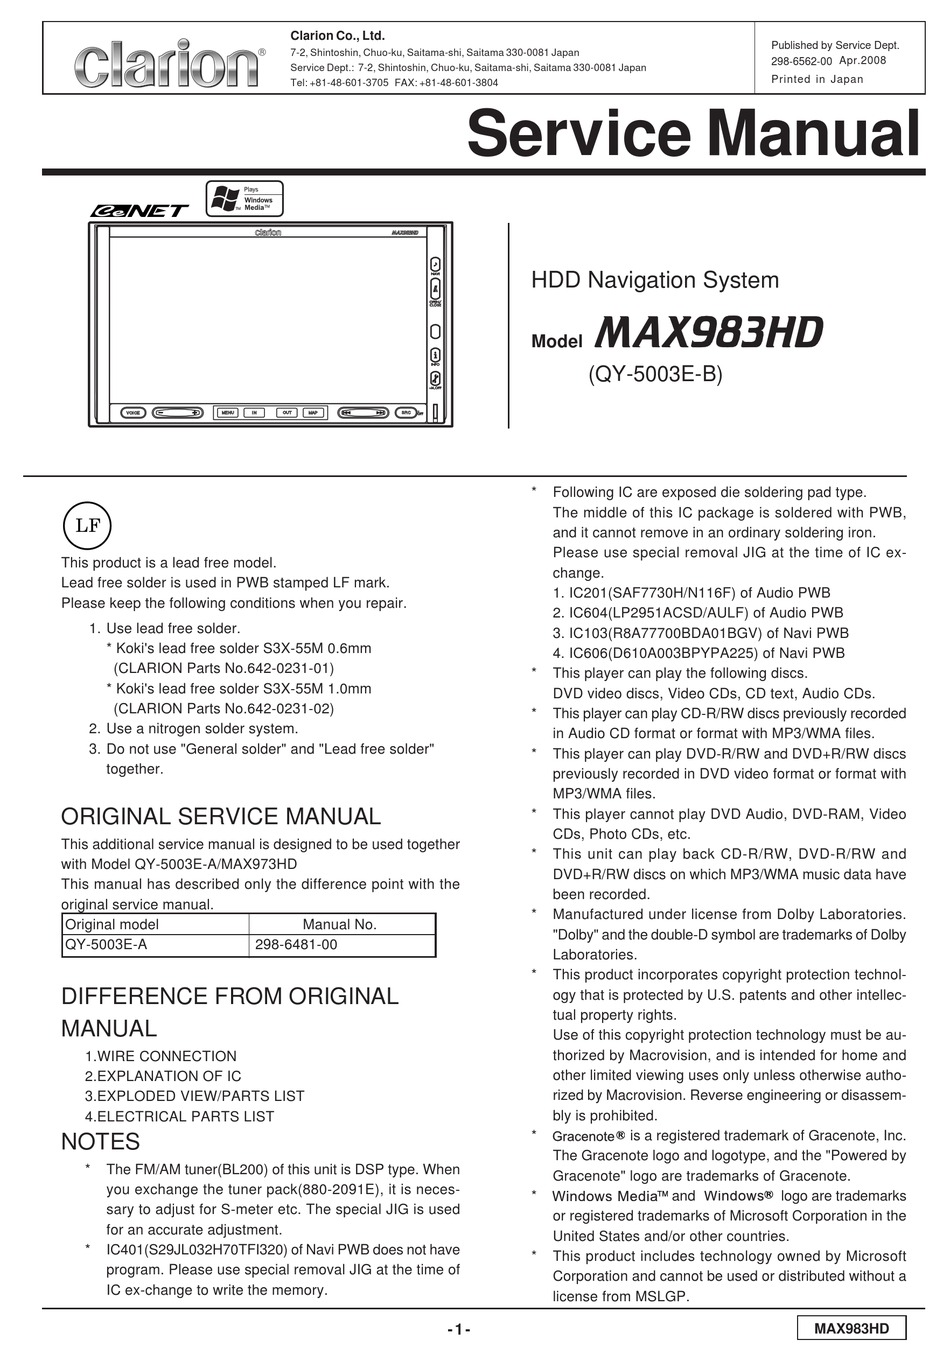 CLARION MAX983HD SERVICE MANUAL Pdf Download | ManualsLib